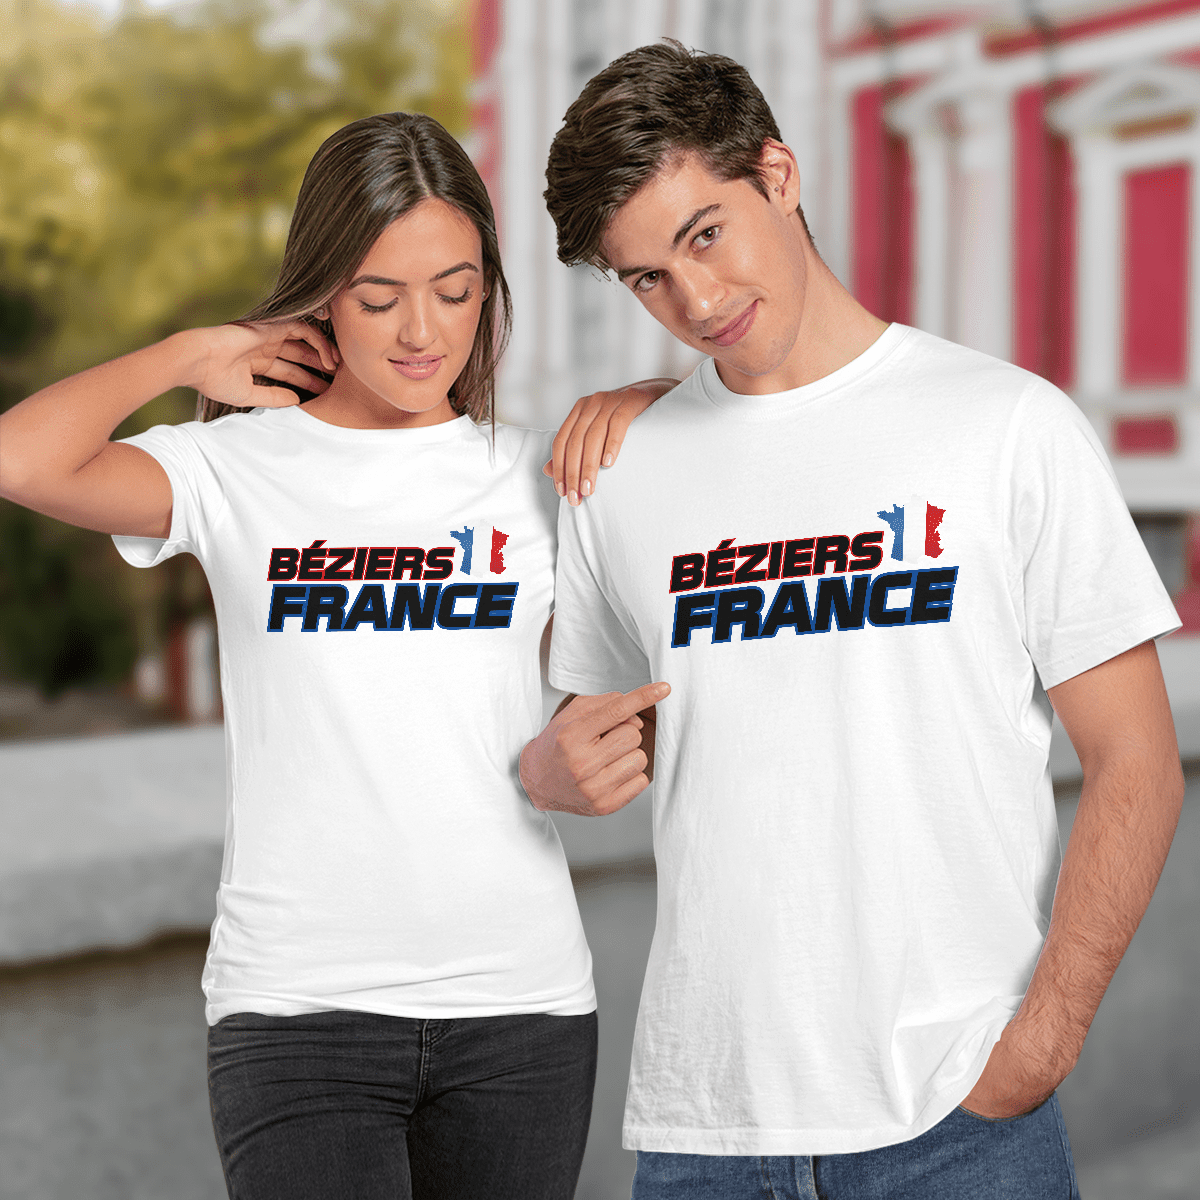 Beziers France Shirt